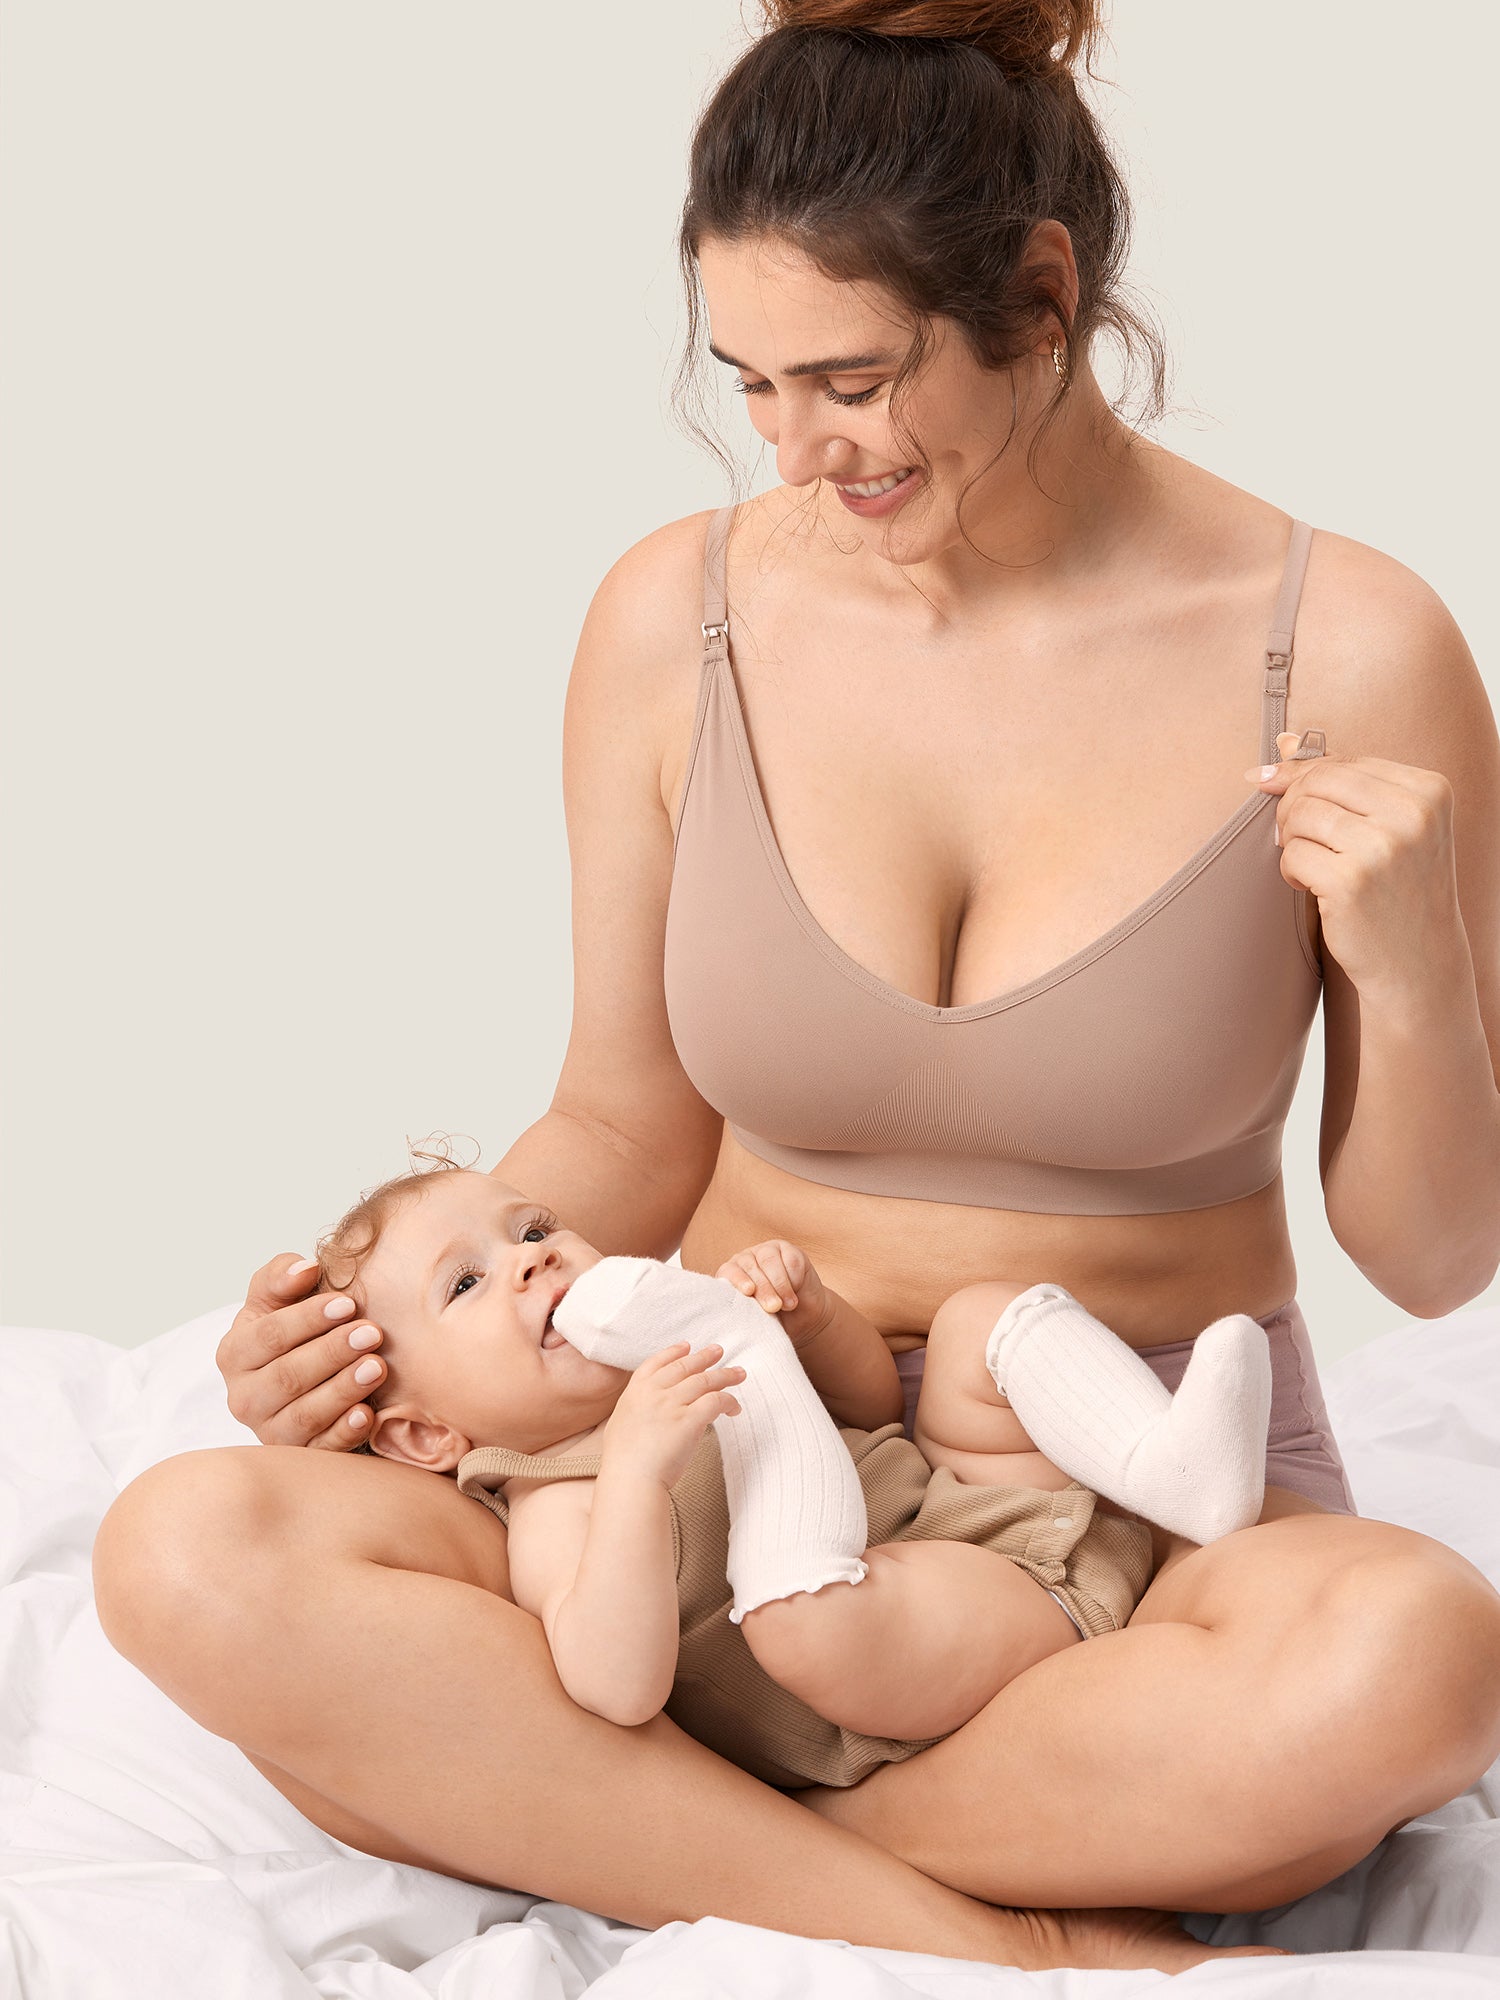 MOMANDA Women's Inbarely Pumping Bra Hands Free Patented All-in-One Nursing  Bras for Breastfeeding Warm Beige Medium at  Women's Clothing store